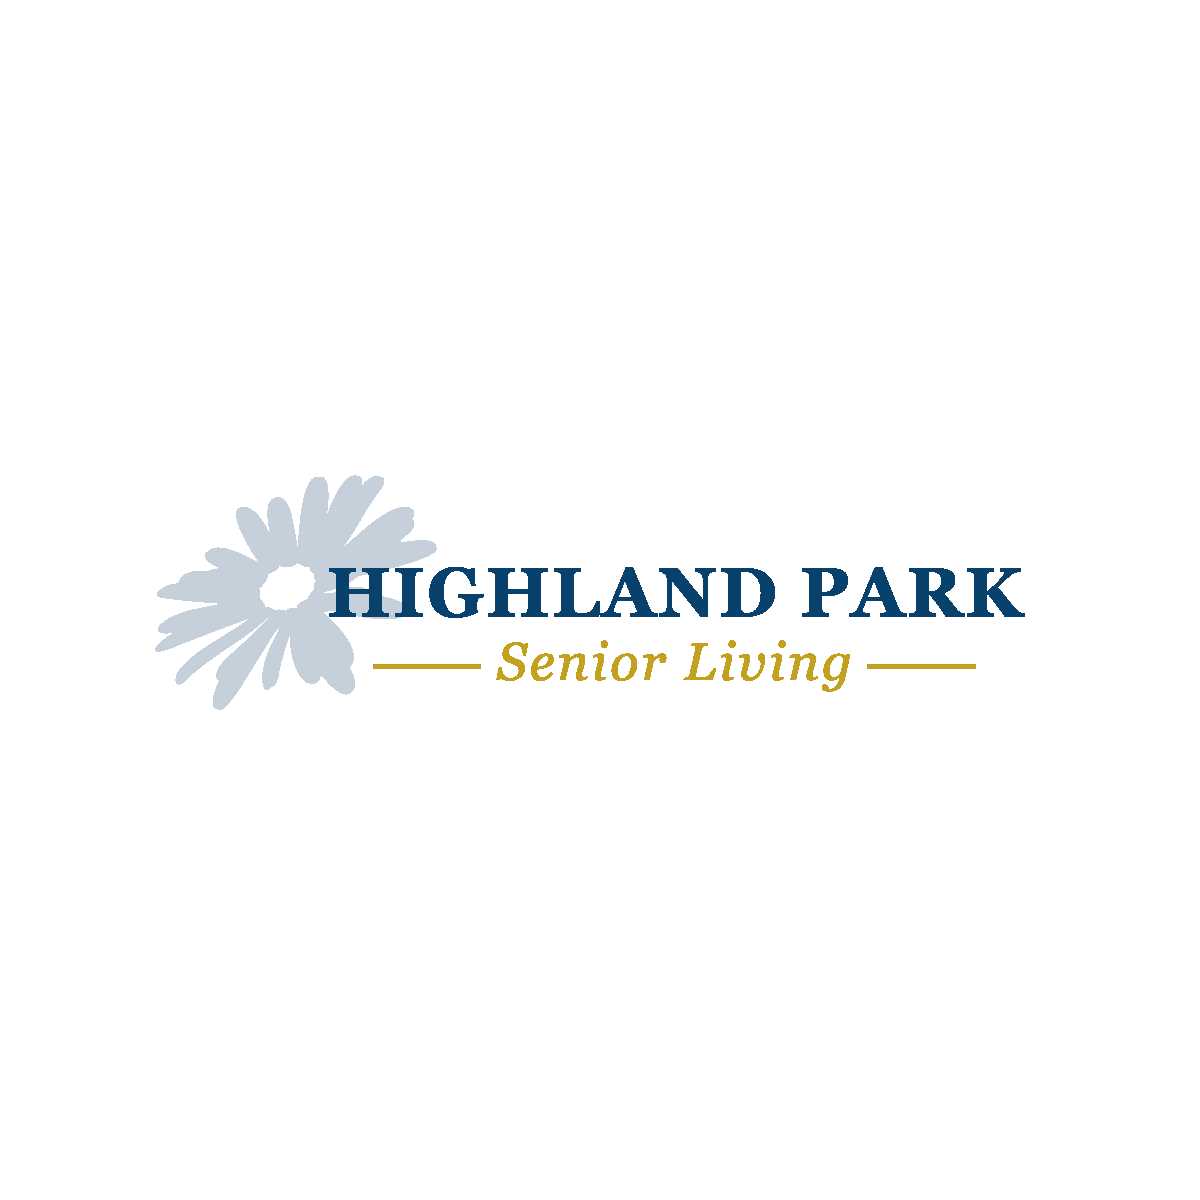 HighlandPark_logo